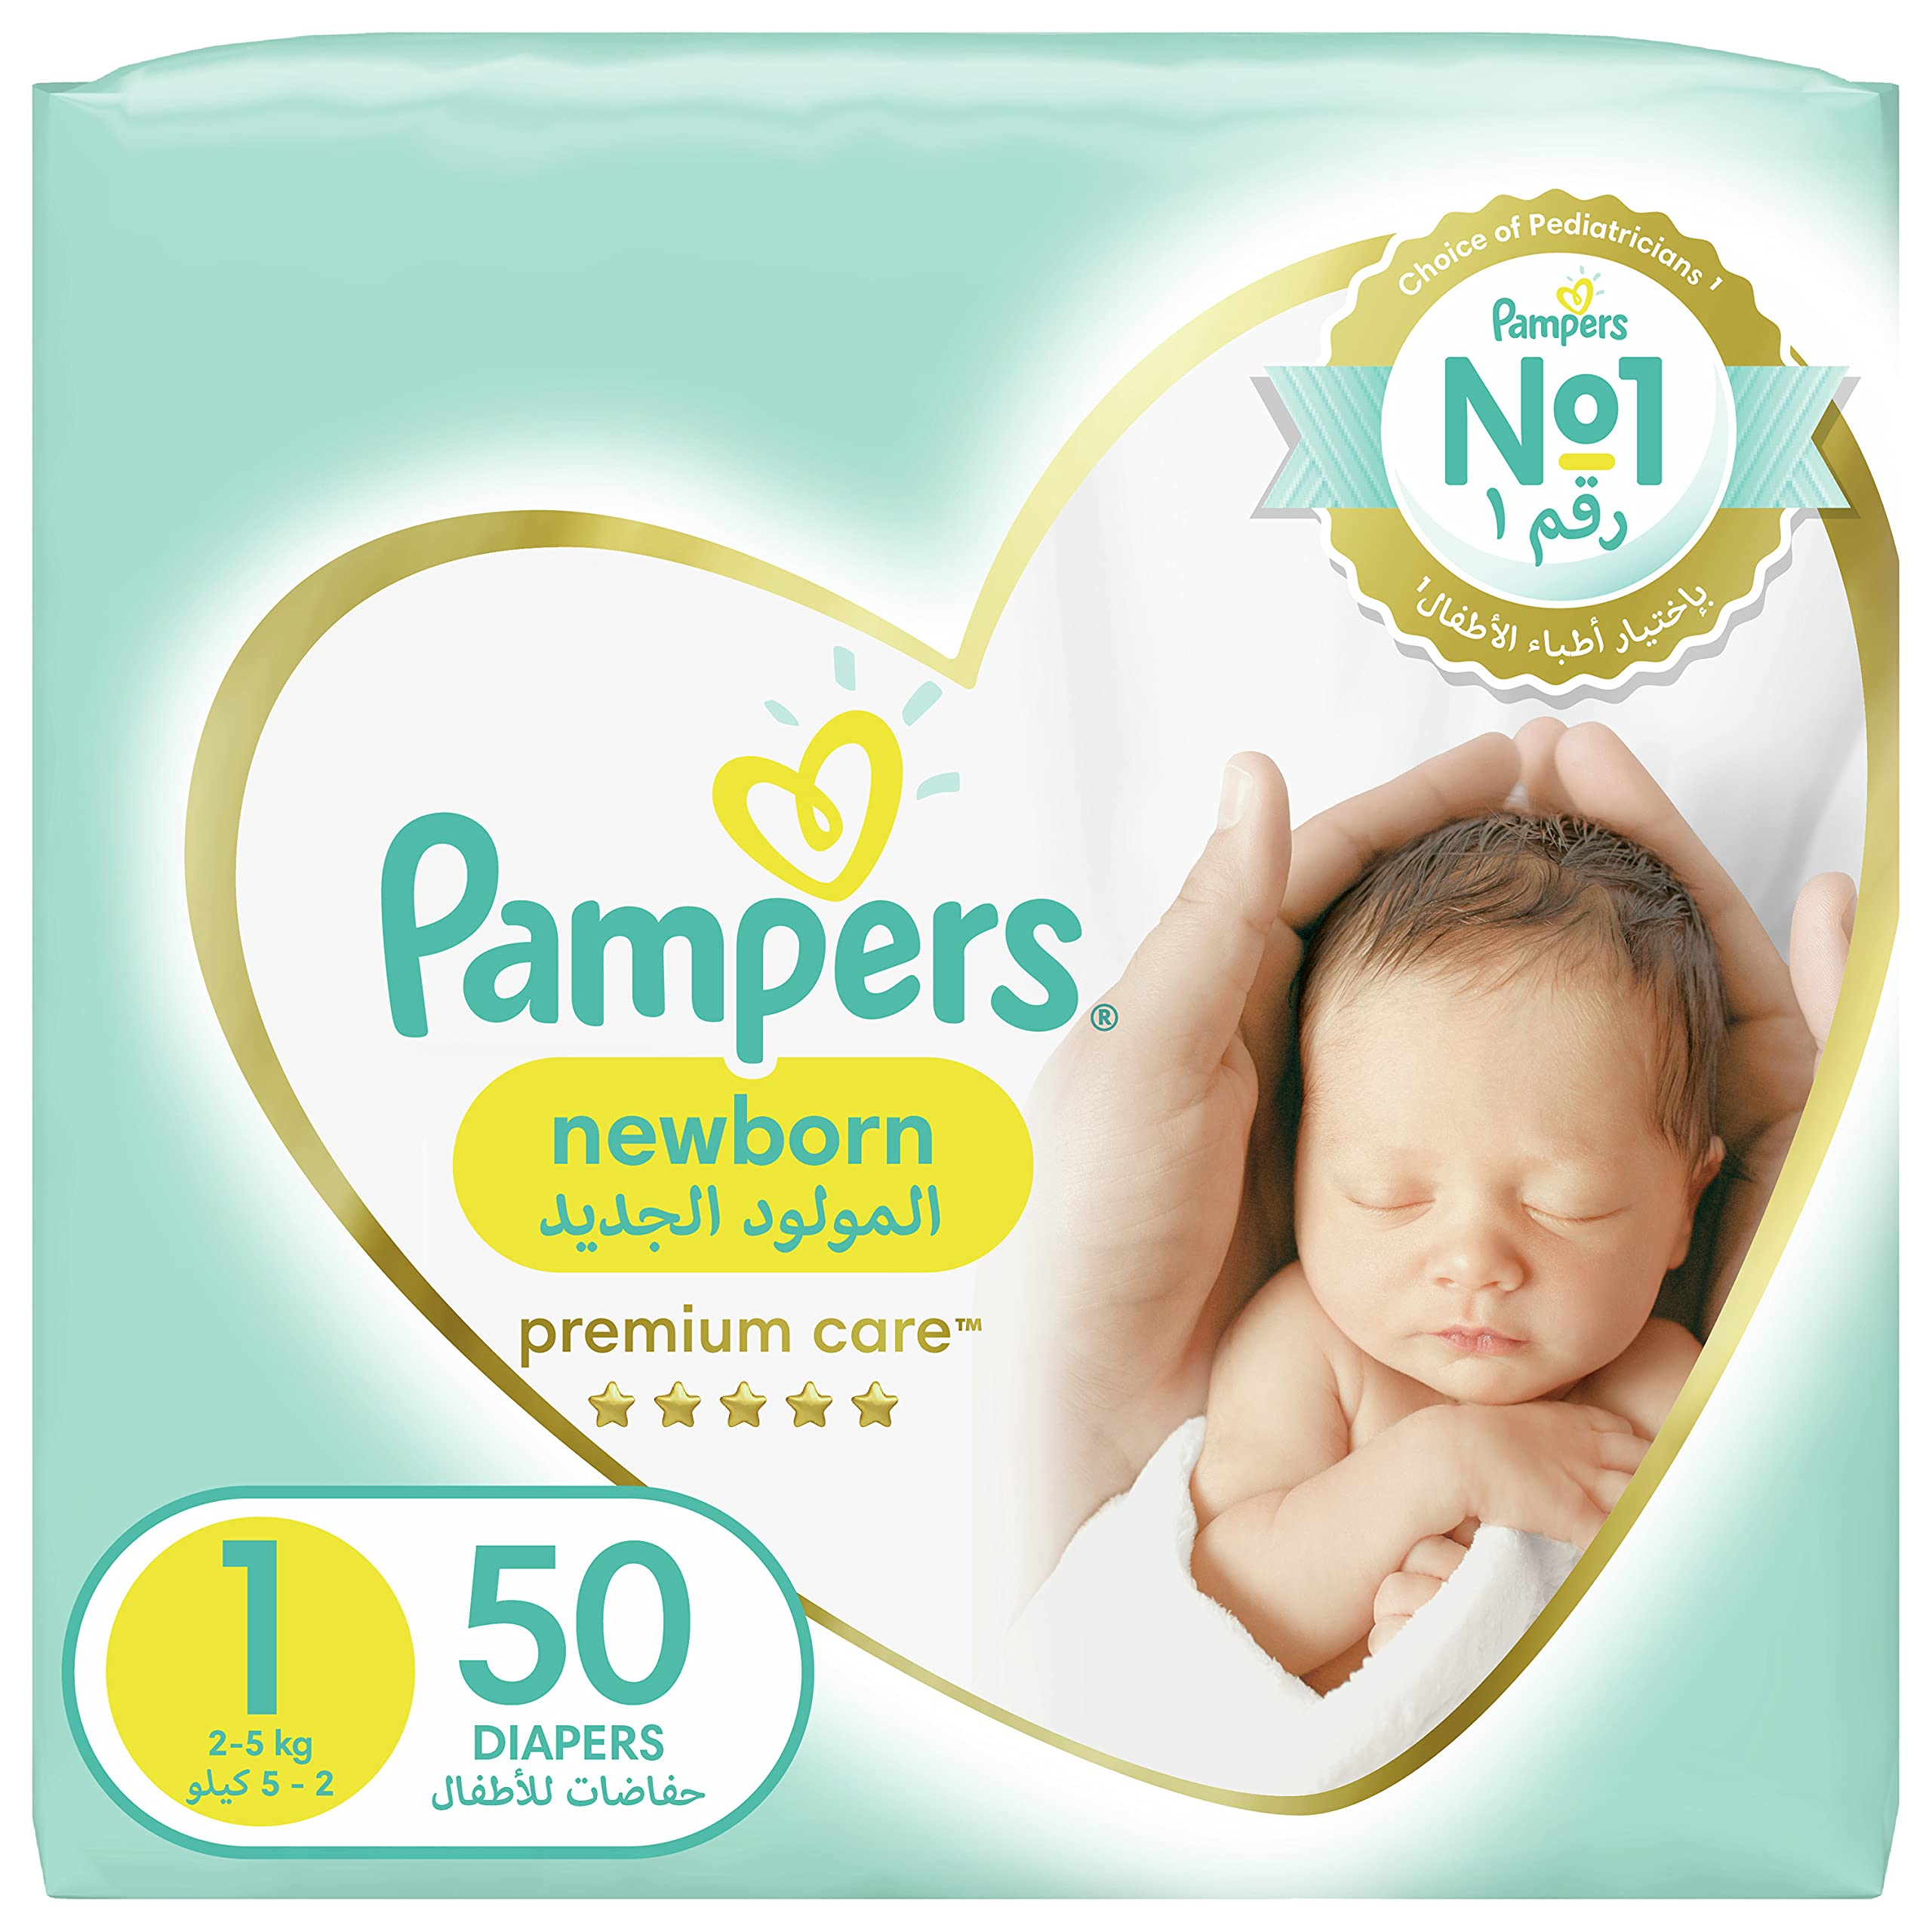 Pampers Premium Care Diapers Size 1, Newborn 2-5kg The Softest Diaper 50pcs